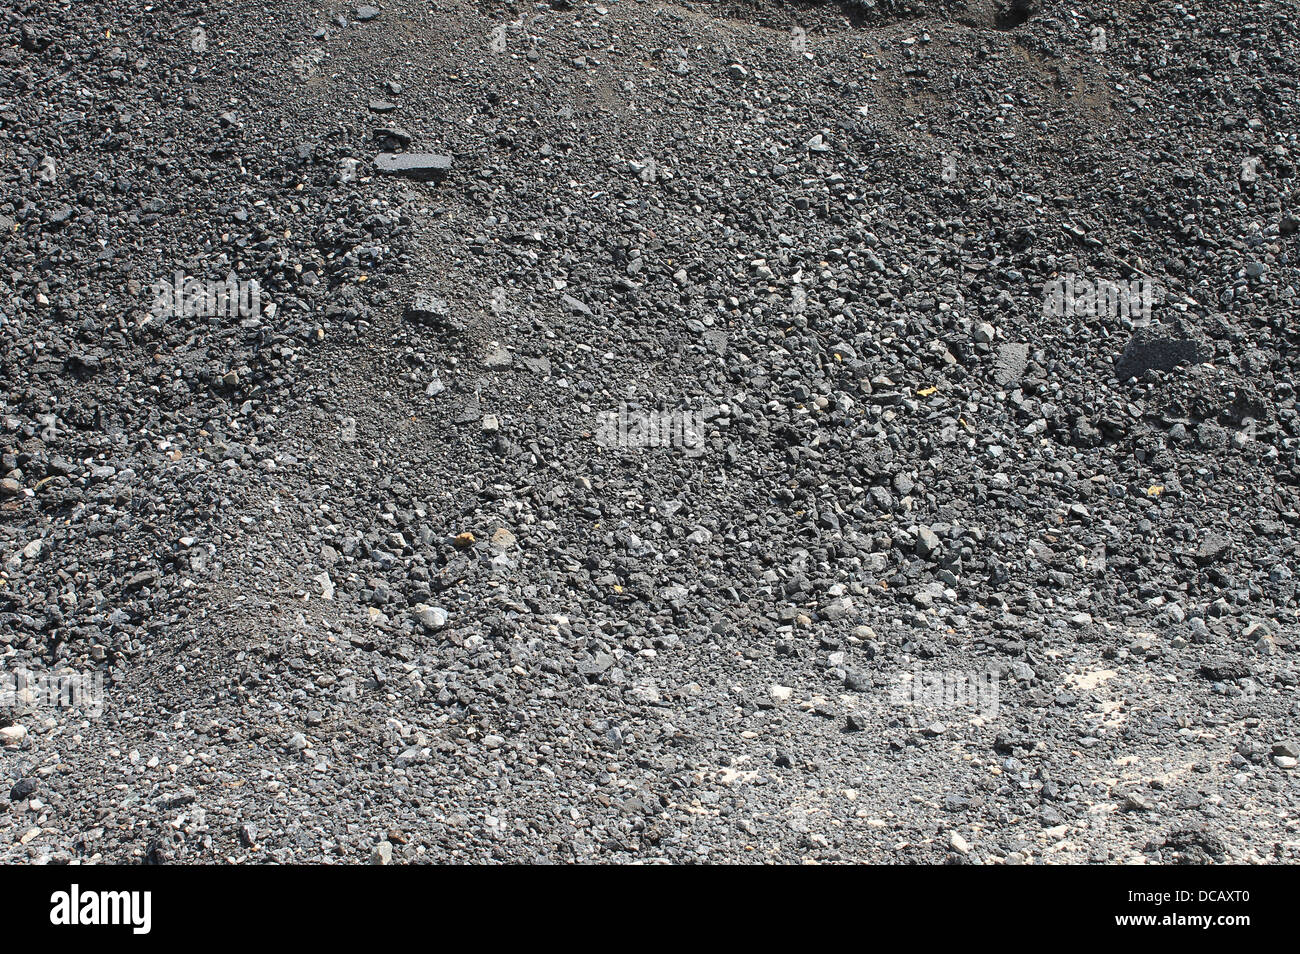 Closeup of black heap or pile of coal. Stock Photo